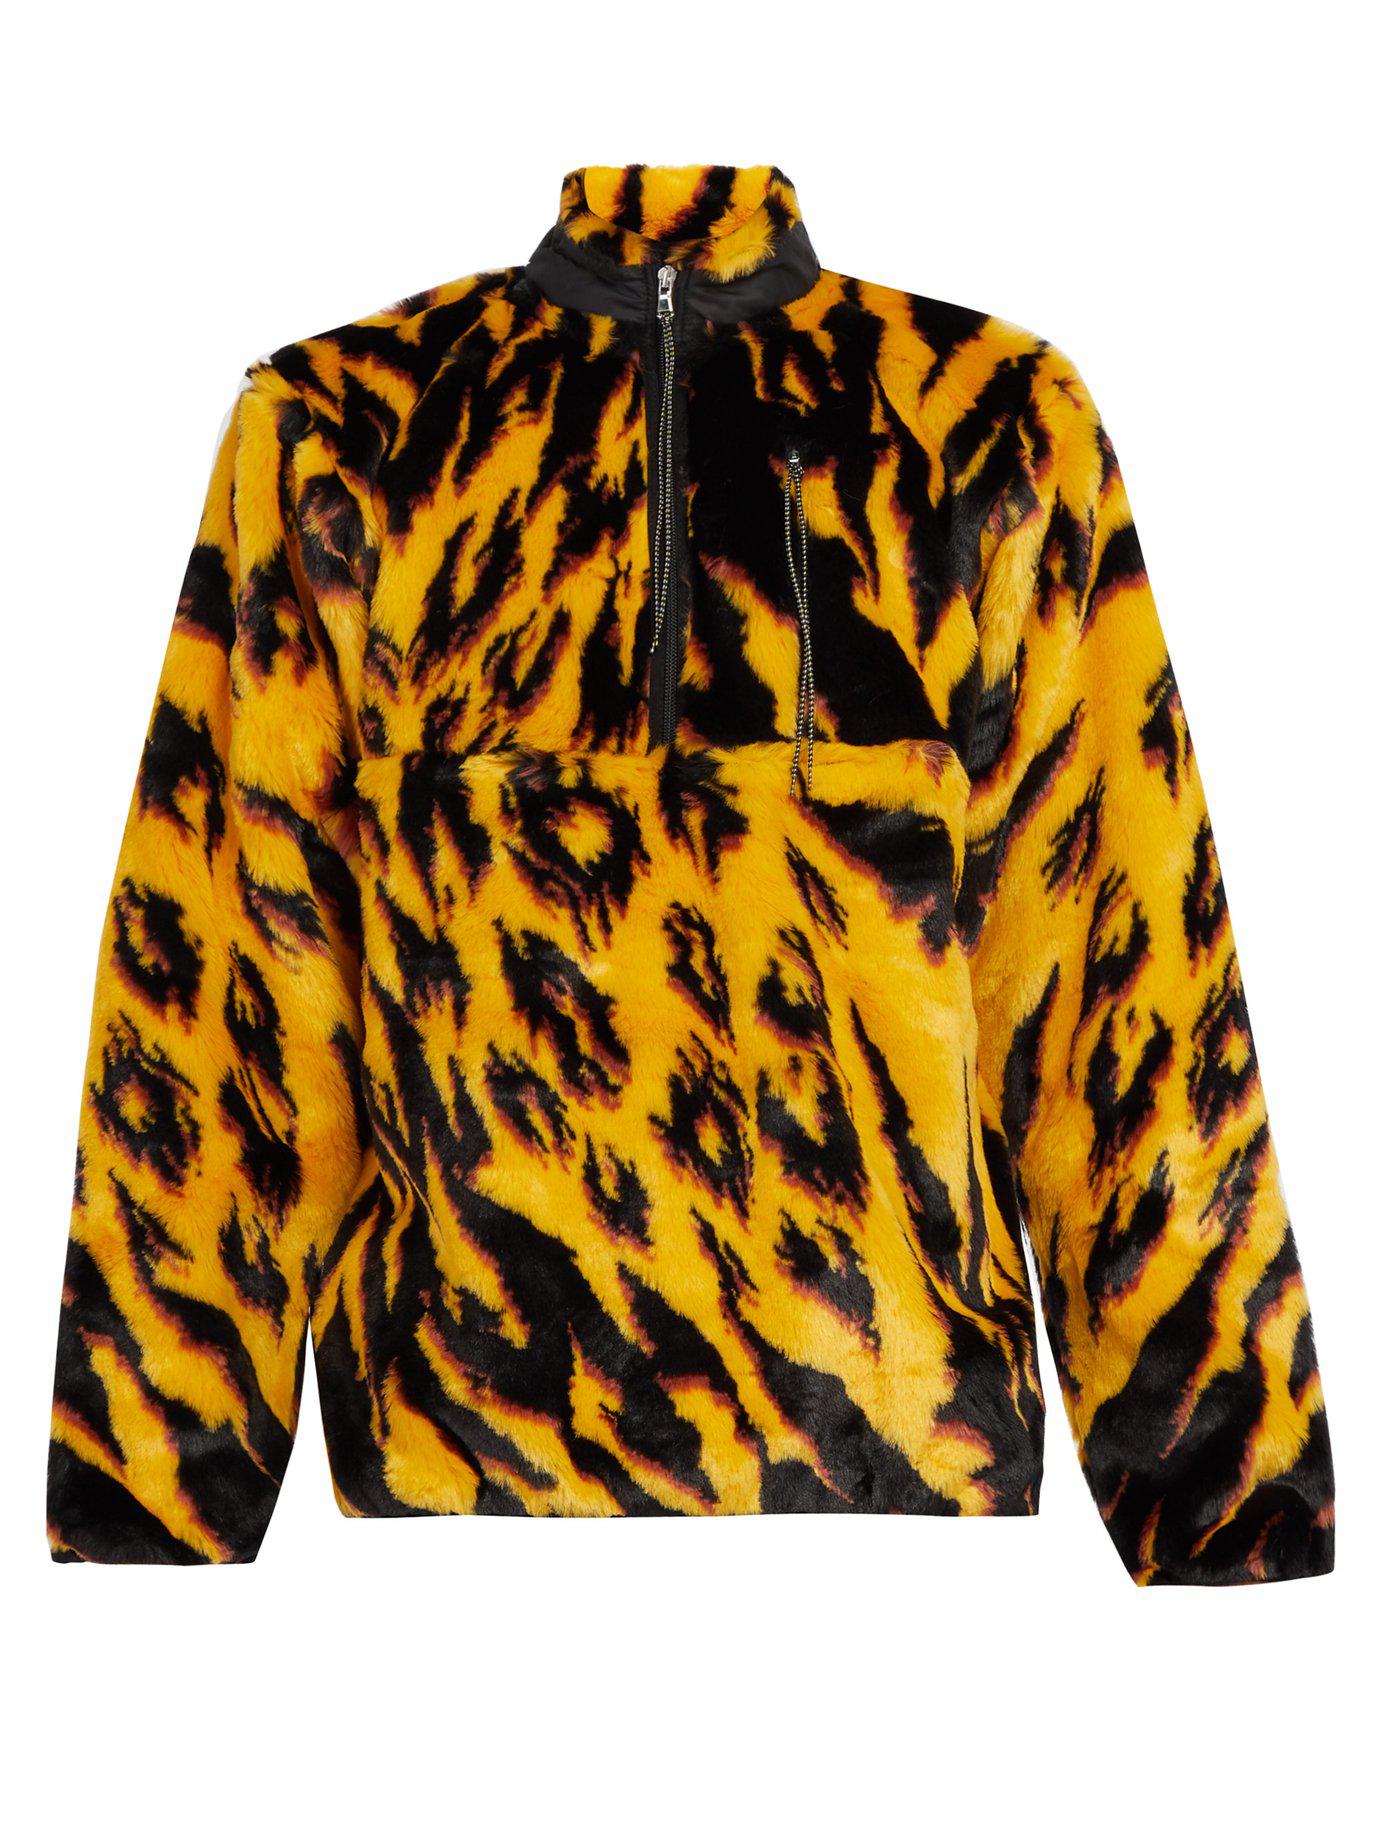 Aries Tiger-print Faux Fur Half-zip Jacket in Orange for Men - Lyst